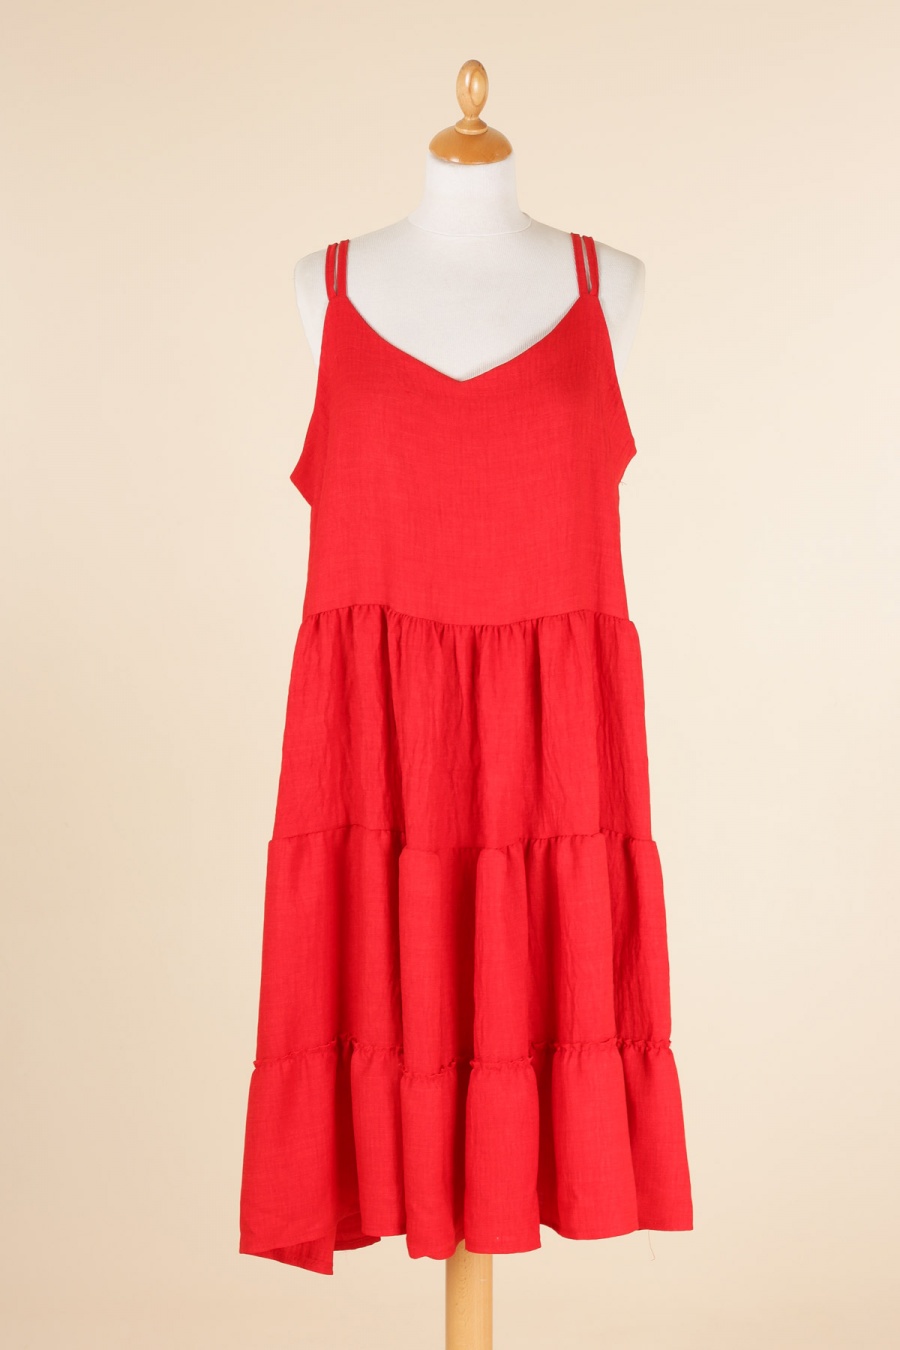 robe rouge 2w paris